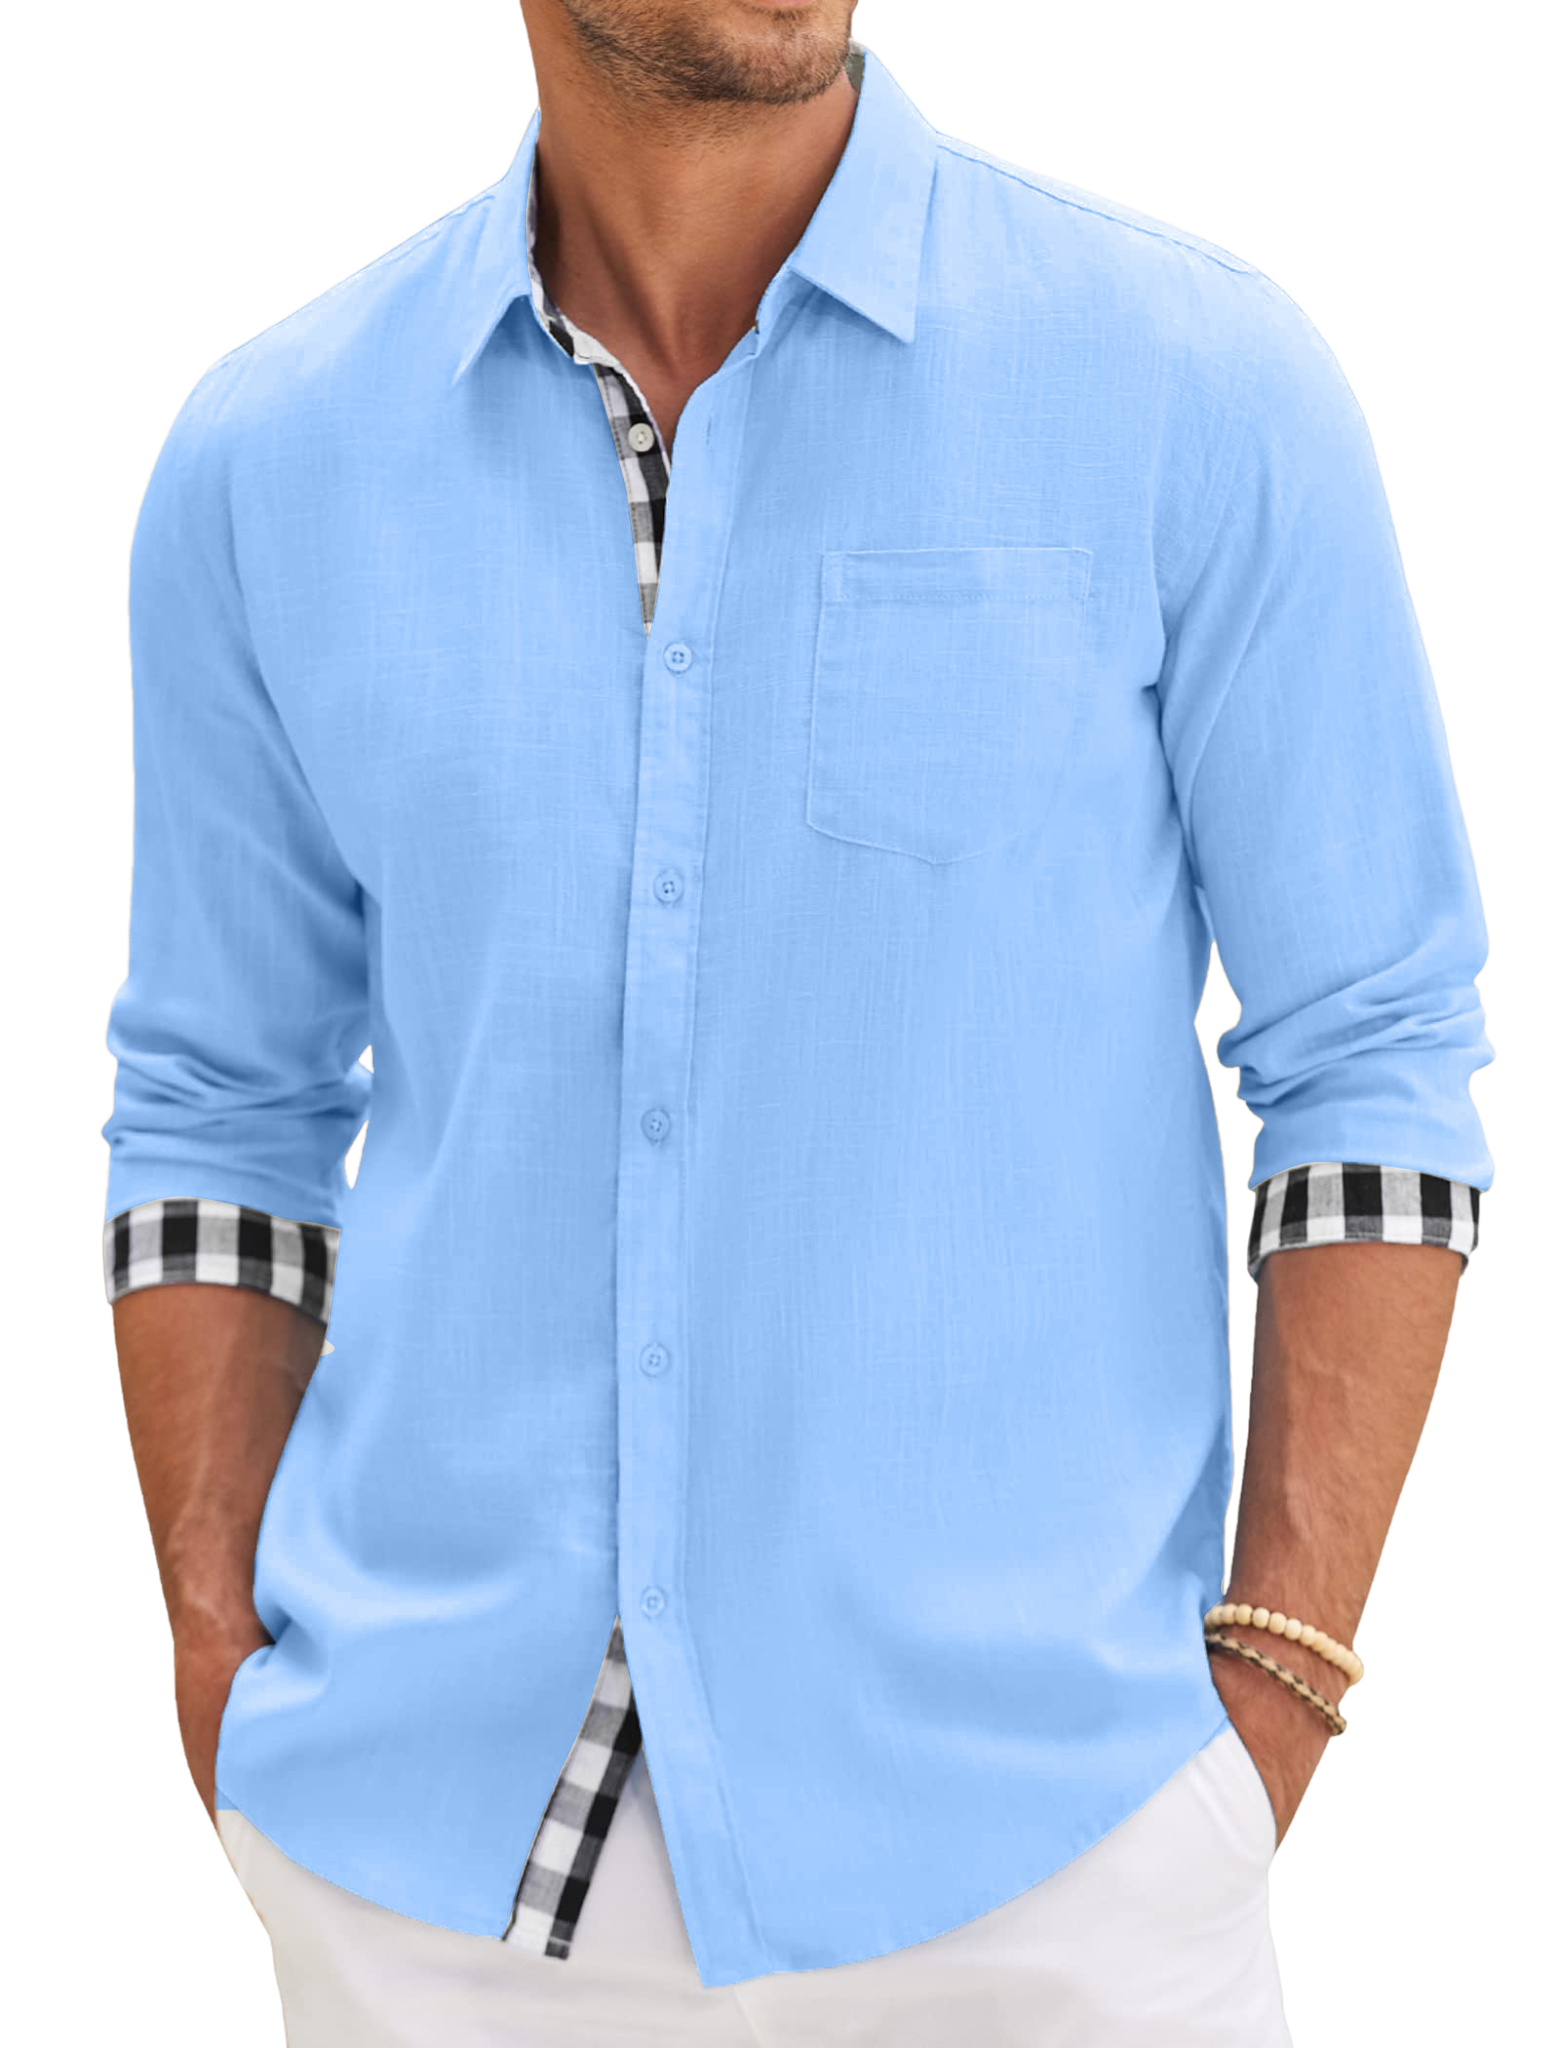 Men's Cotton Aand Linen Simple Basic Plaid Pocket Classic Long-Sleeved Shirt